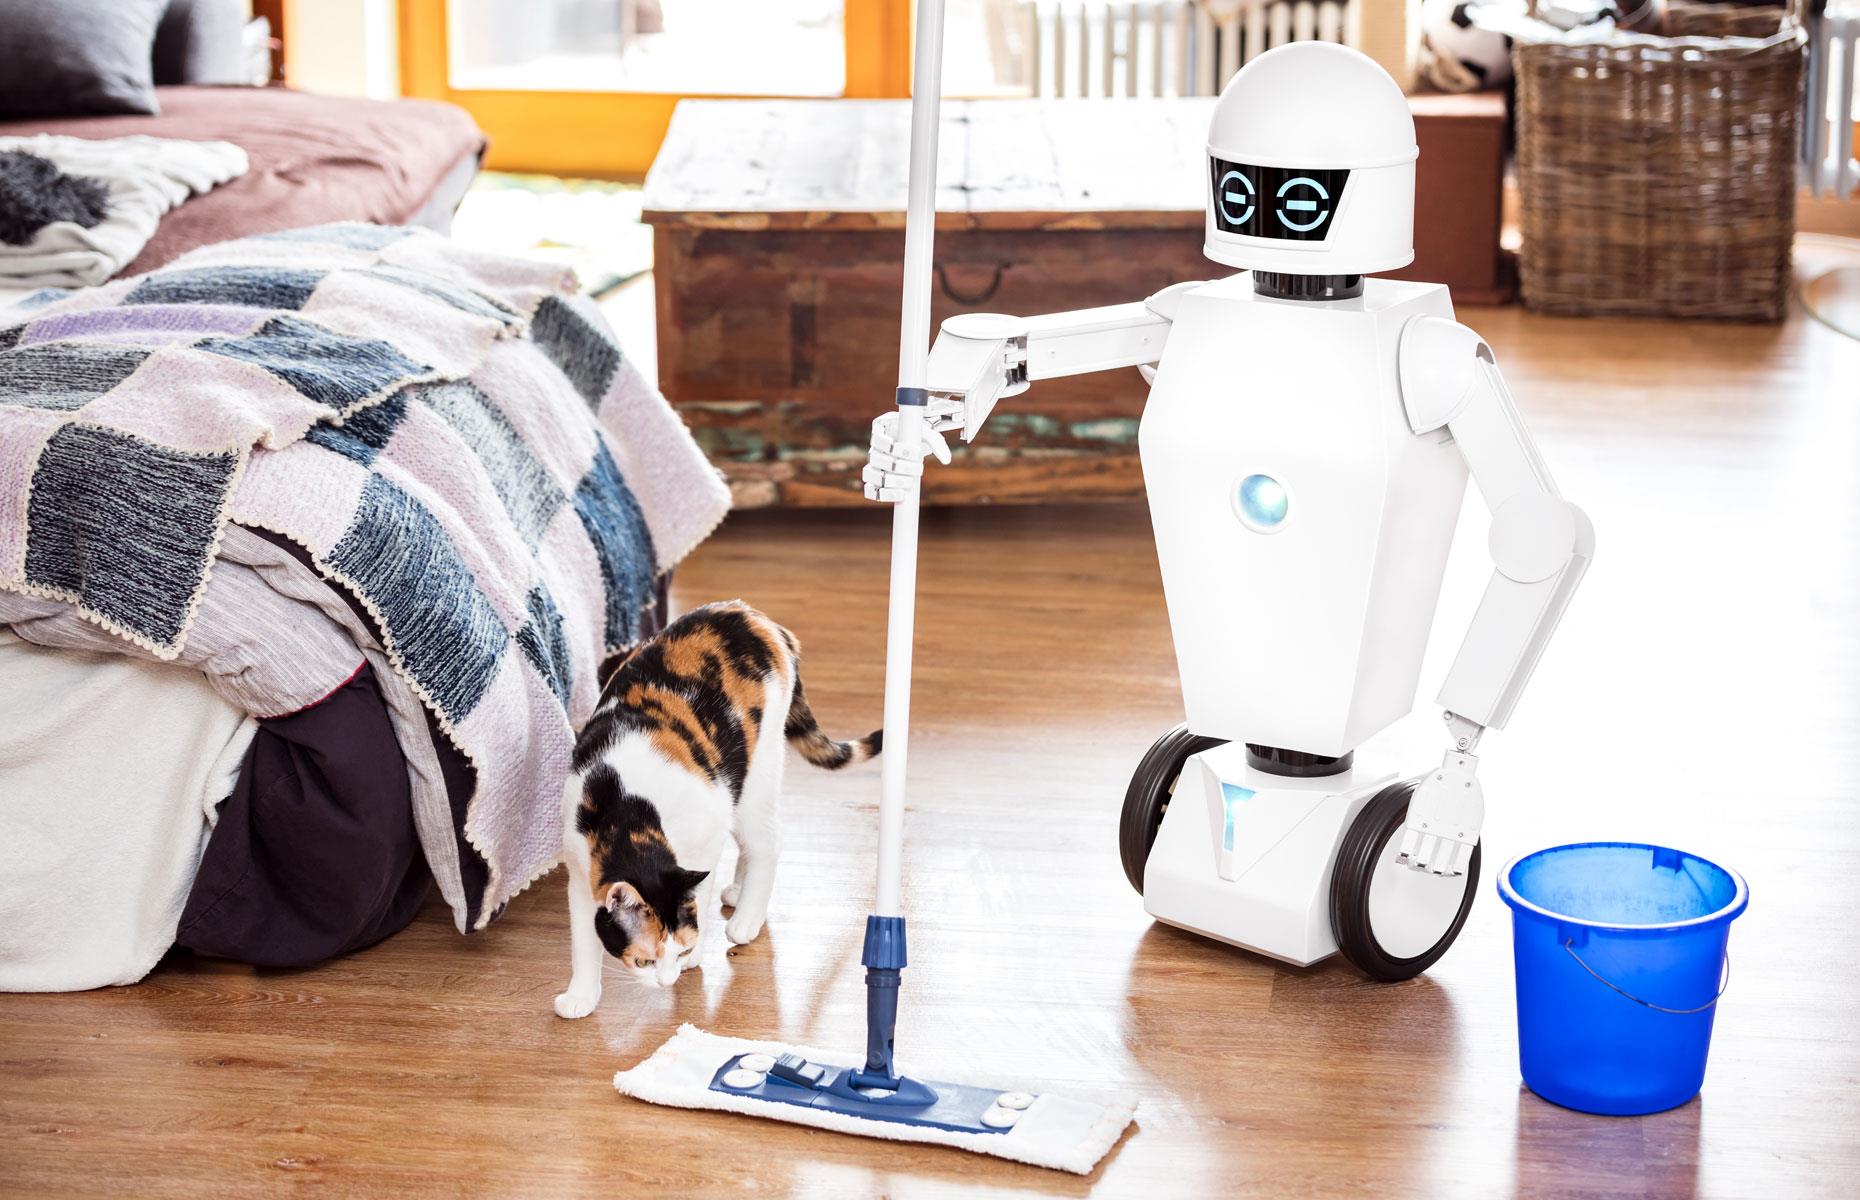 7. AI-powered home robots